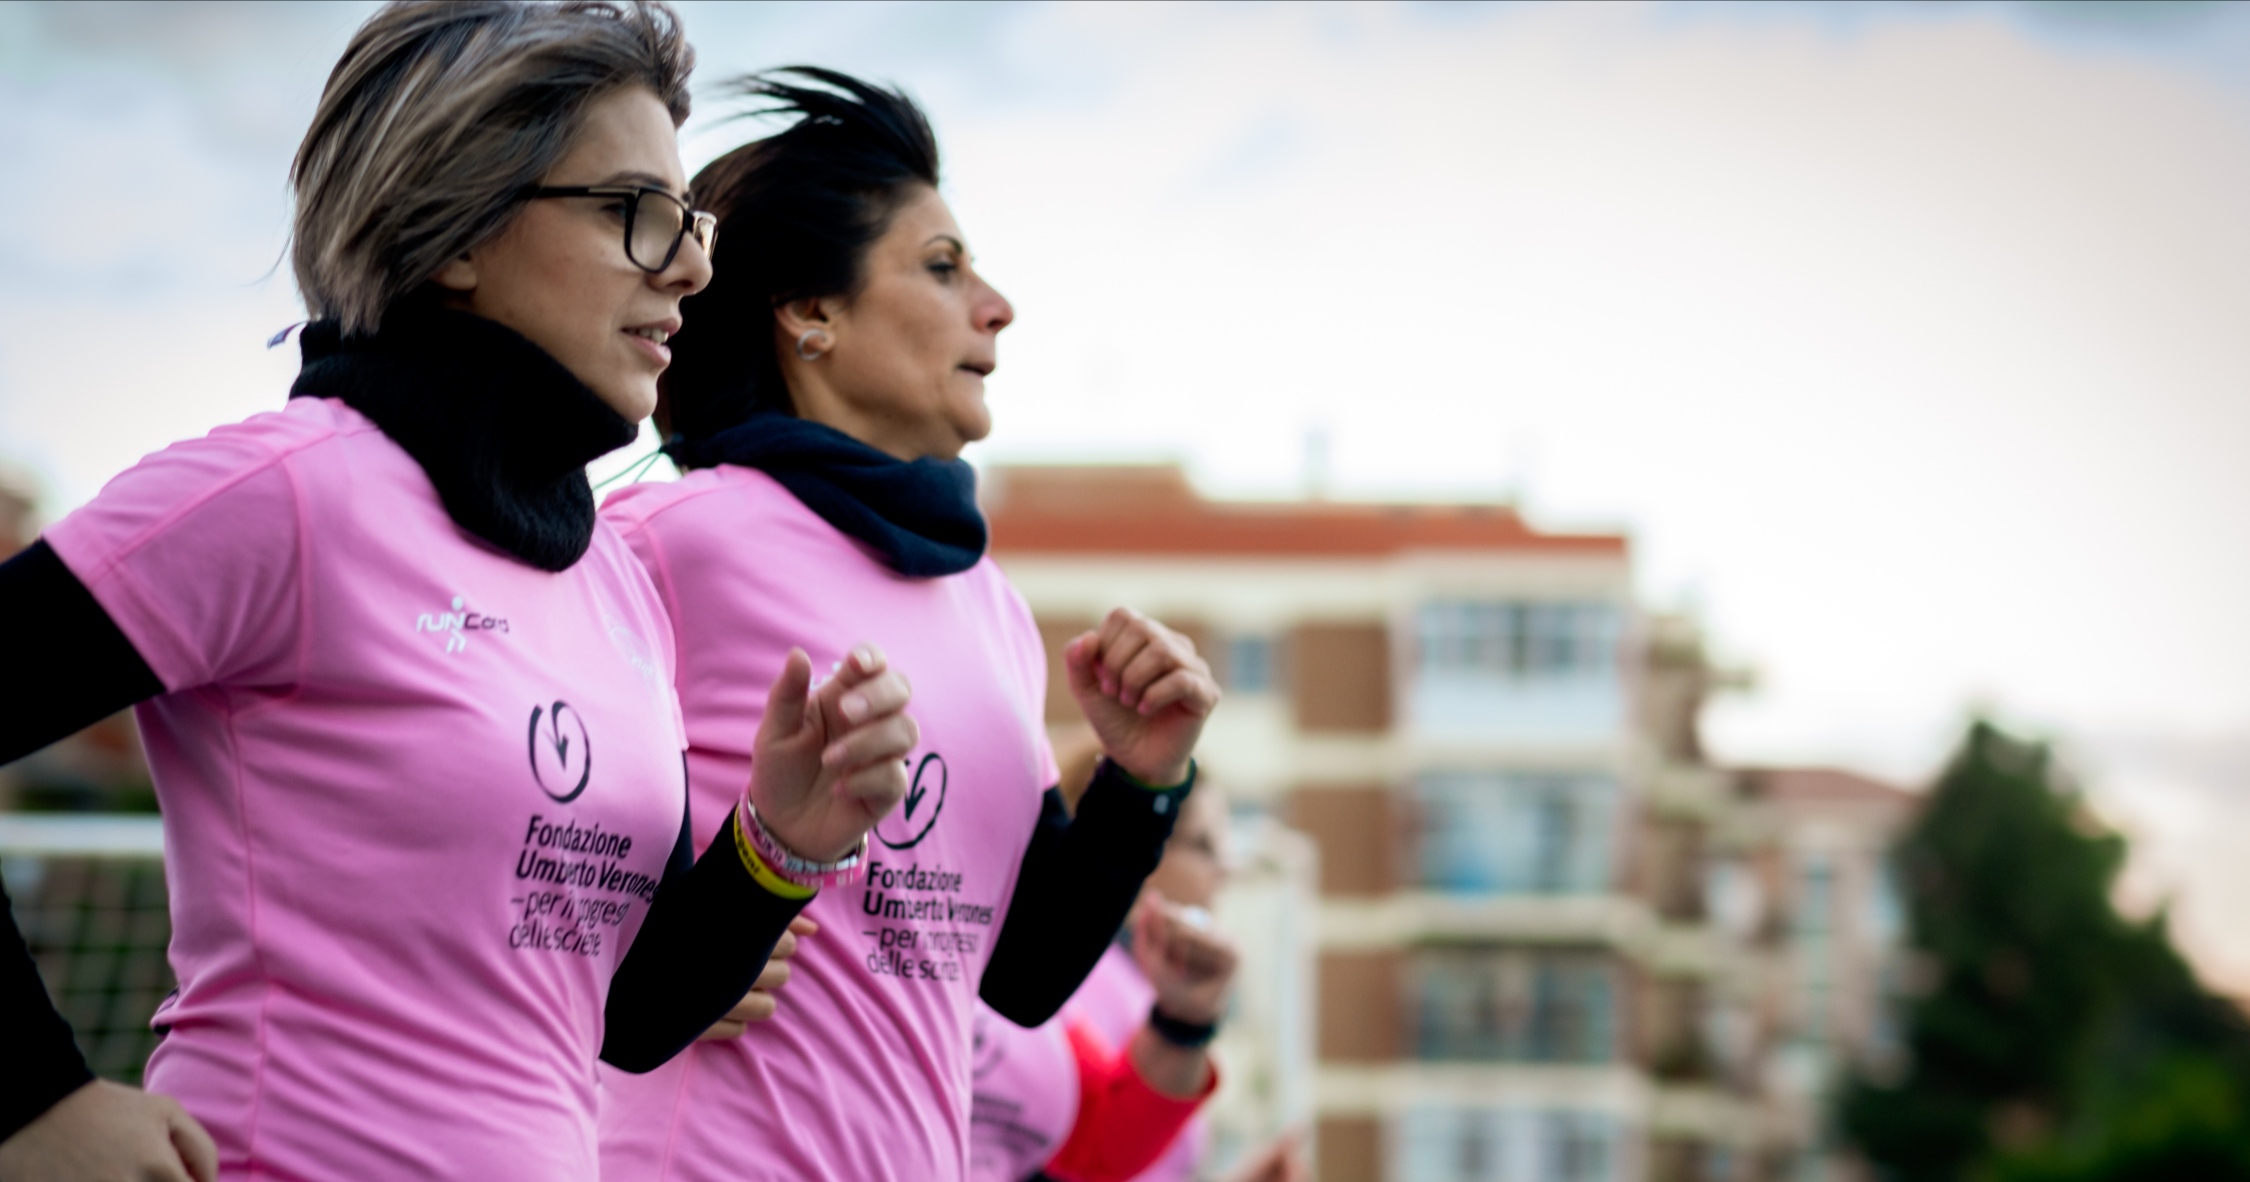 Running Team 2019 Cagliari -Giovanna Maria  Zuncheddu